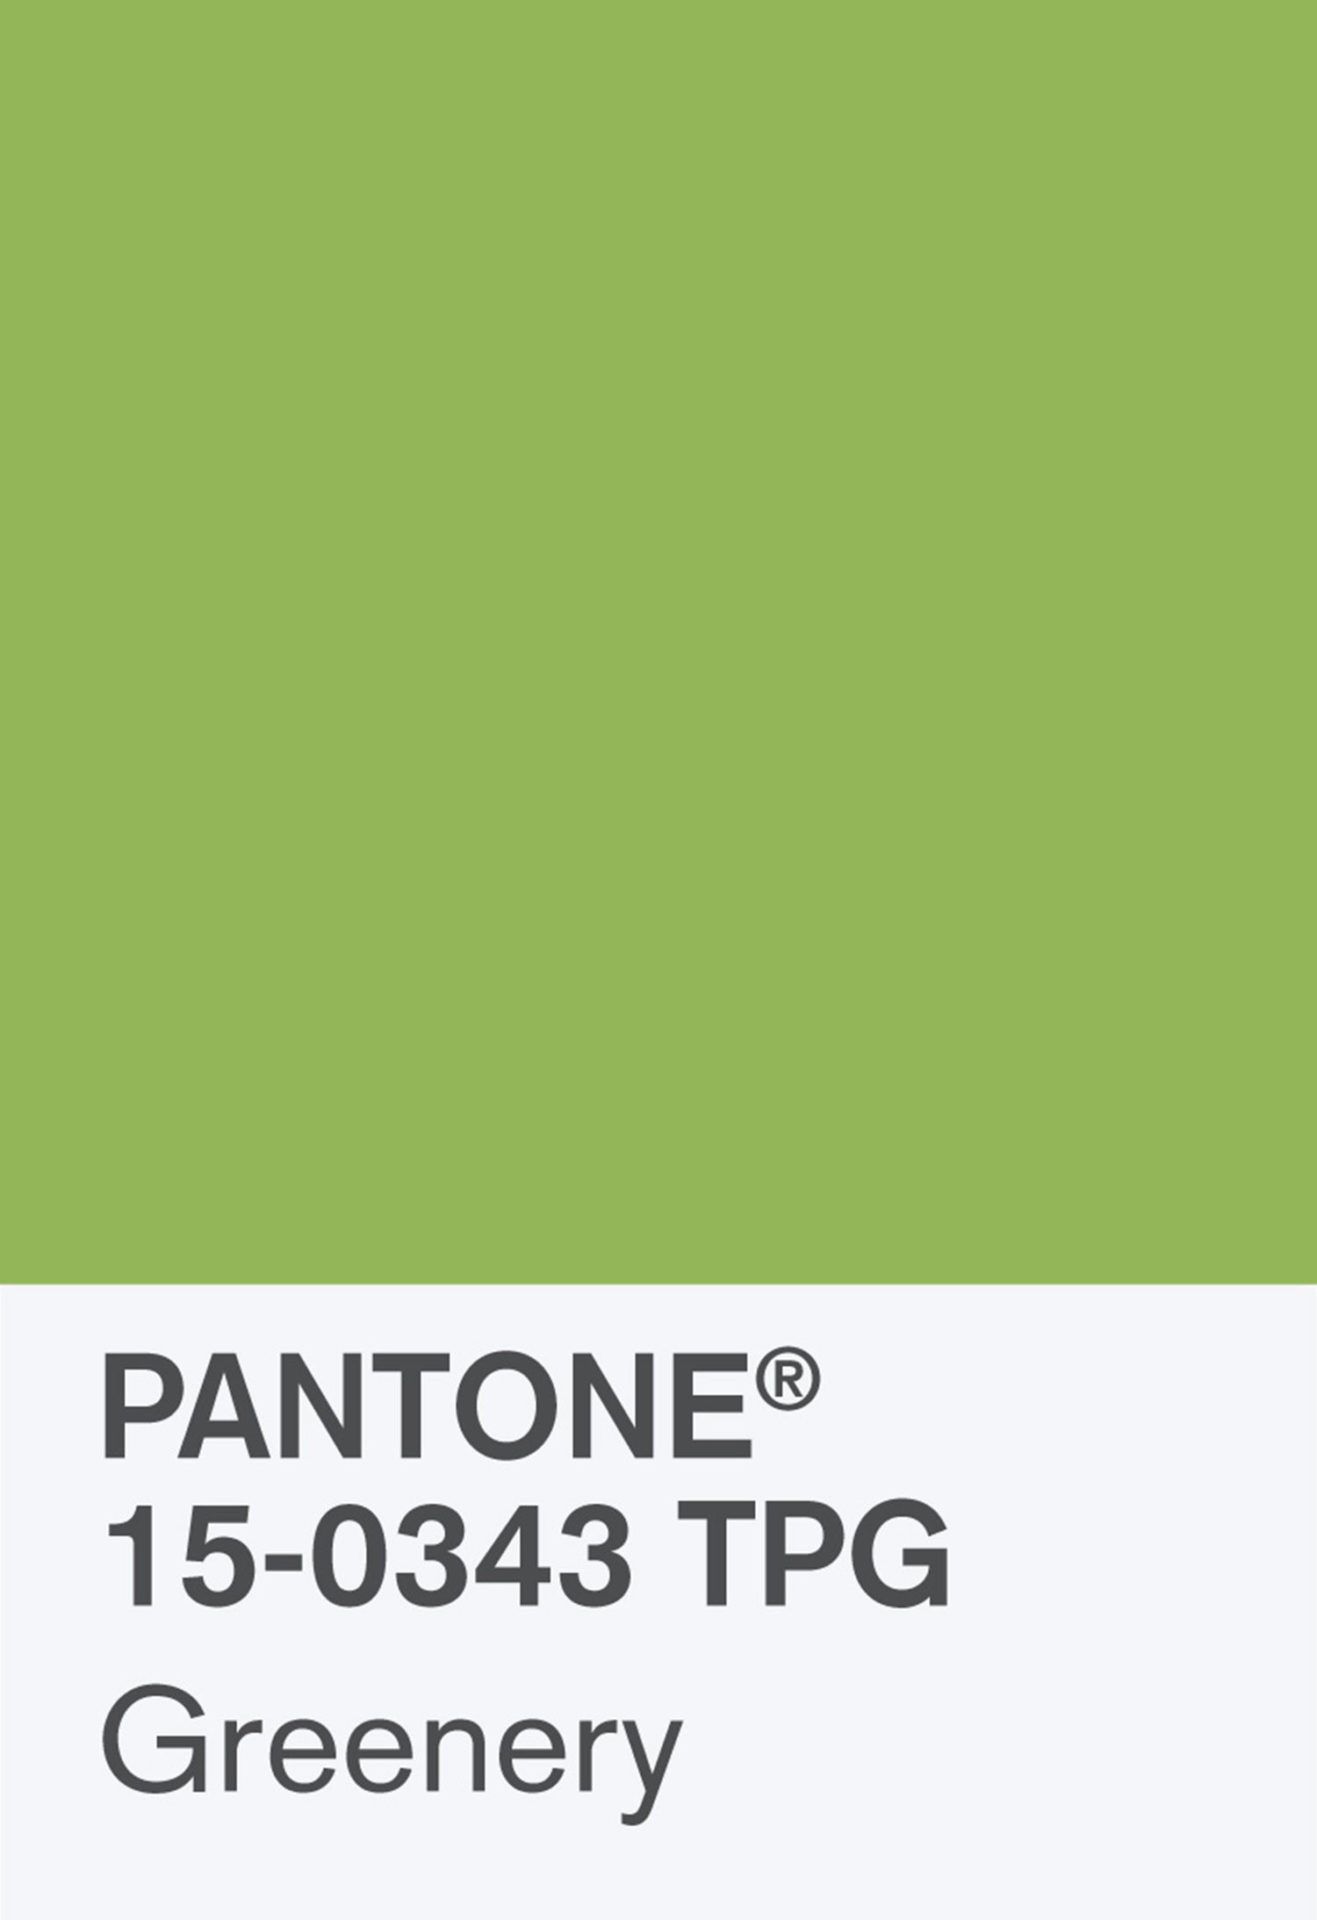 pantonechip-15-0343-tpg-greenery-1317x1920.jpg